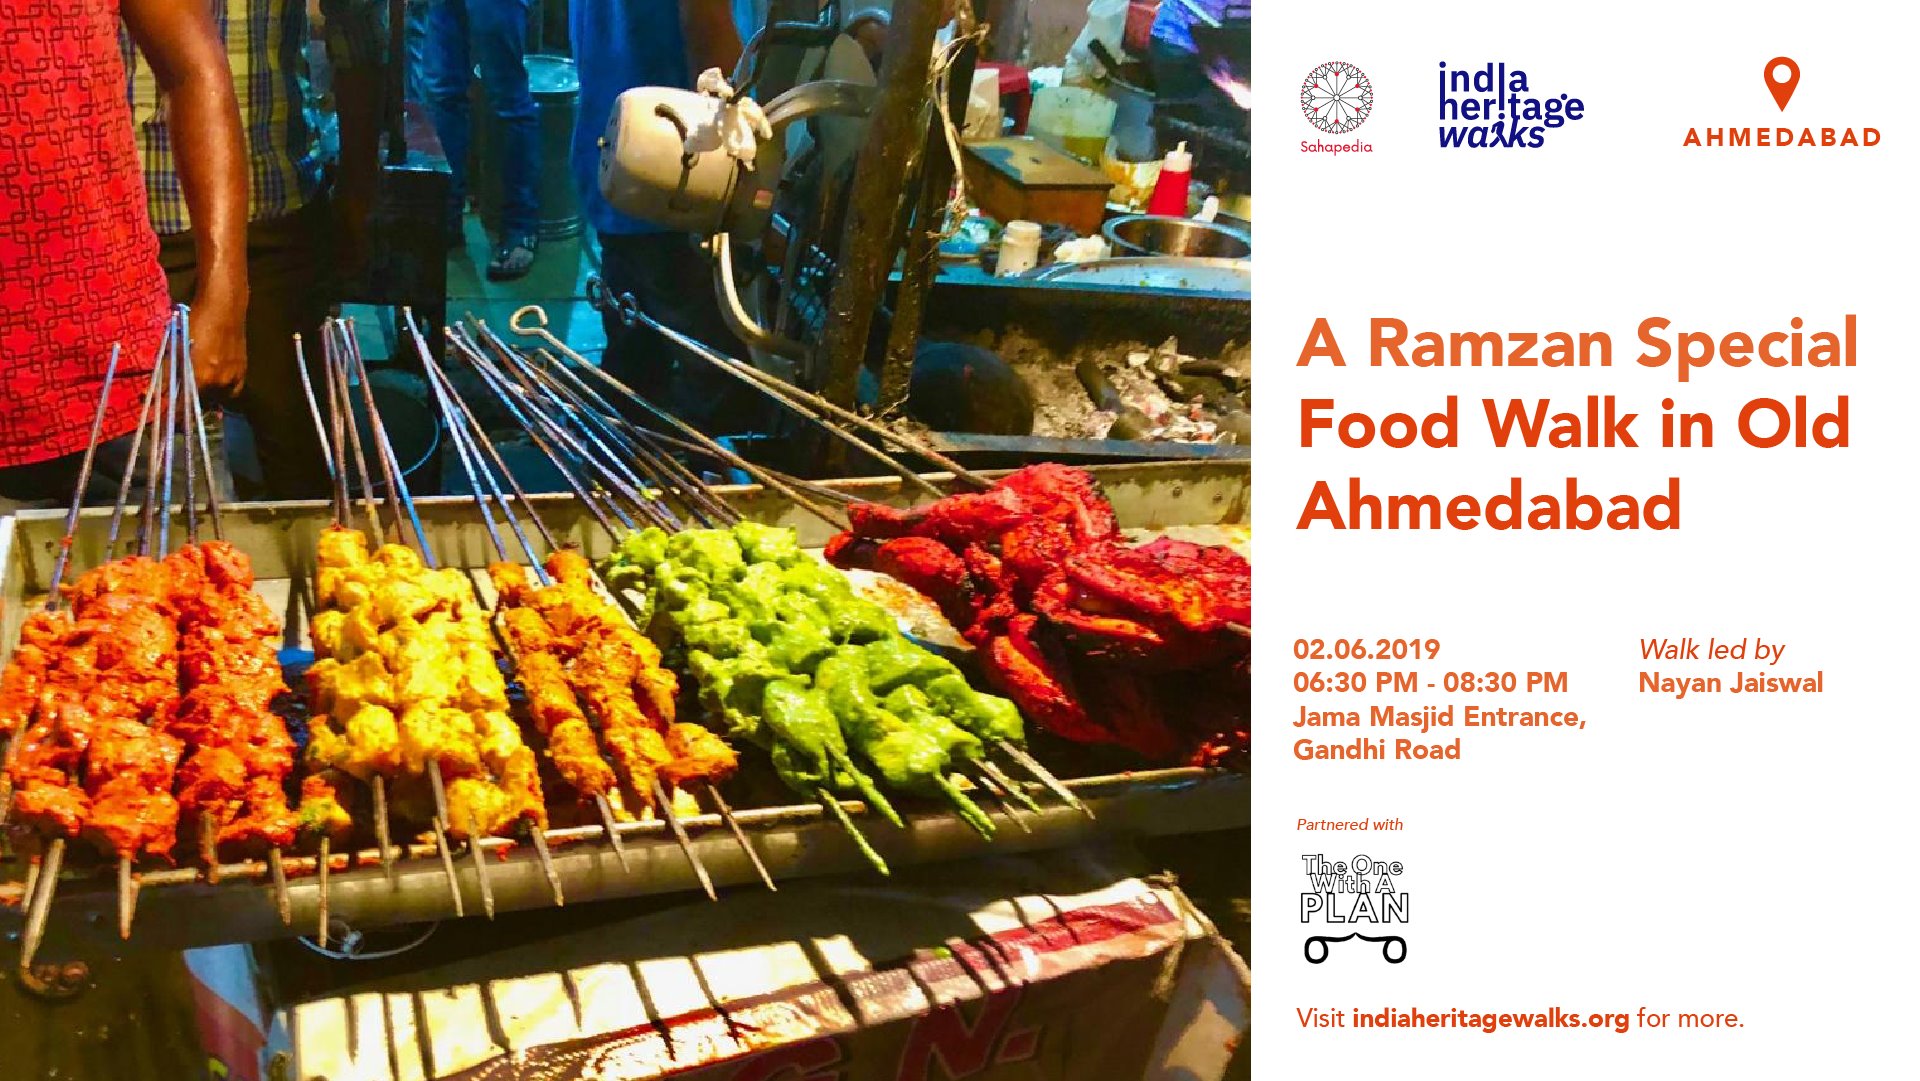 https://creativeyatra.com/wp-content/uploads/2019/05/A-Ramzan-Special-Food-Walk-in-Old-Ahmedabad.jpg